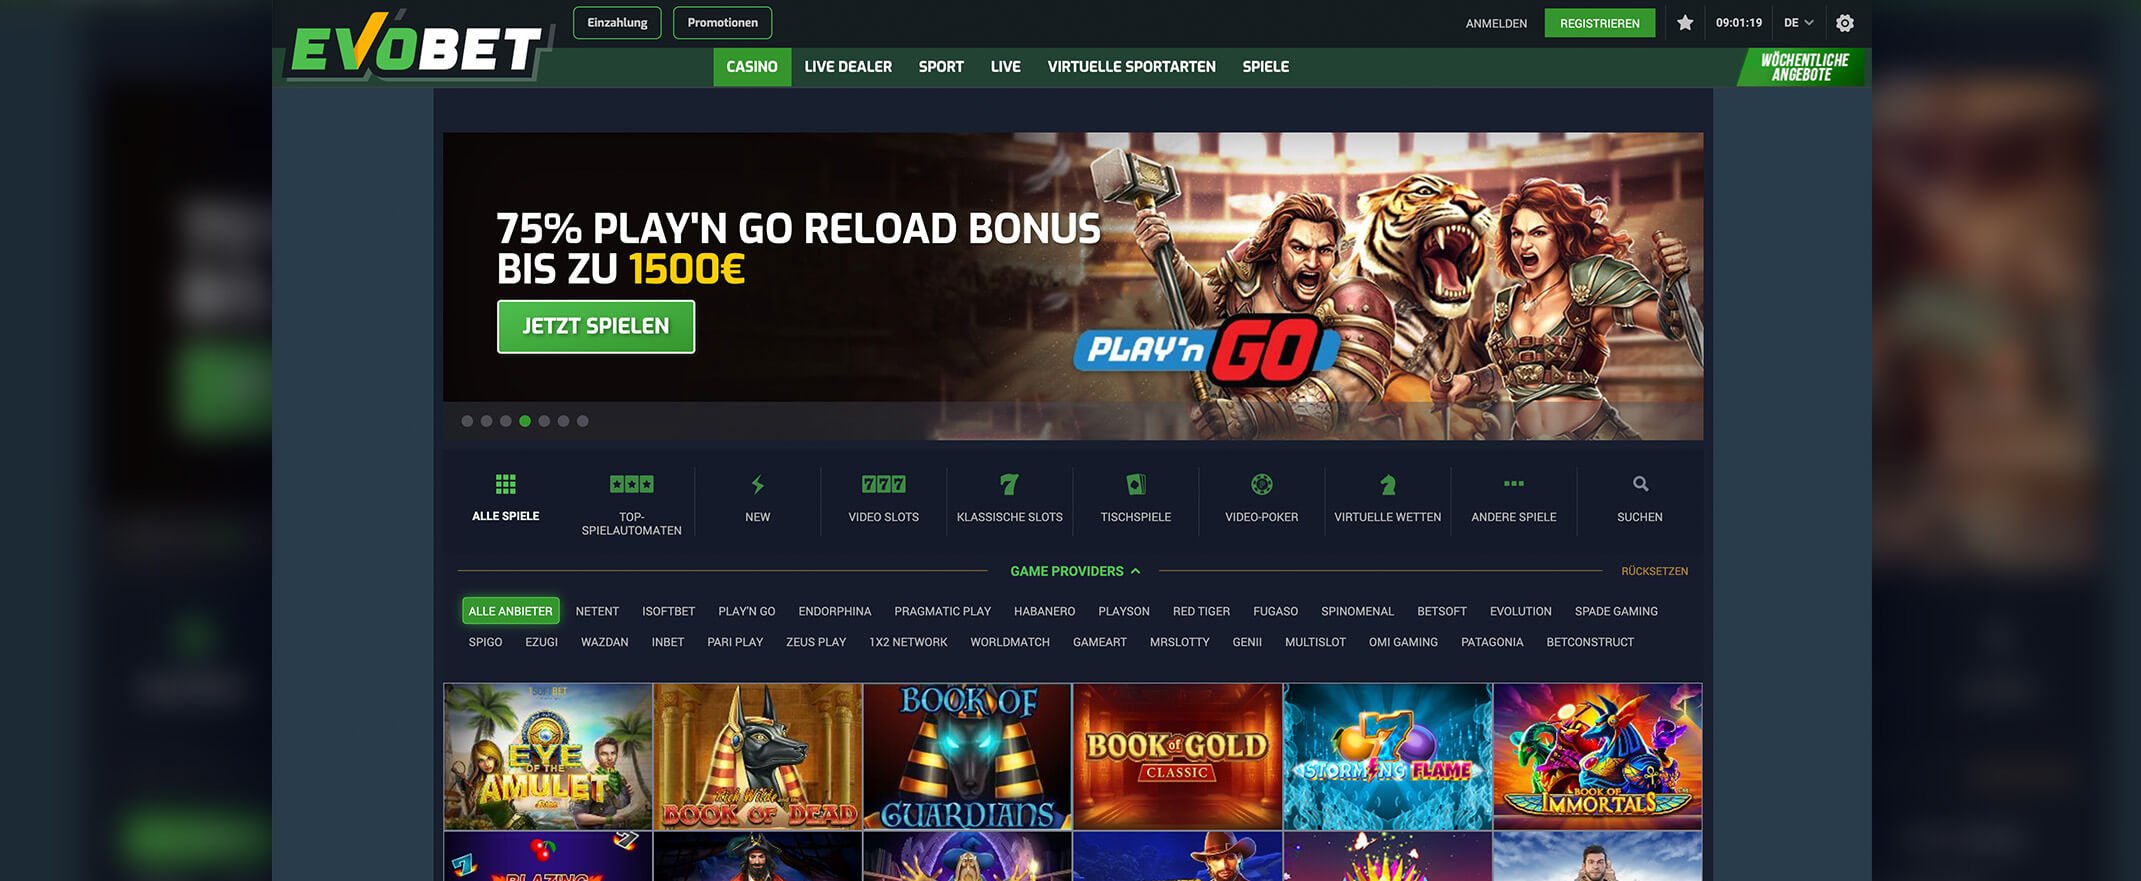 Evobet Reloaded Casino Bonus